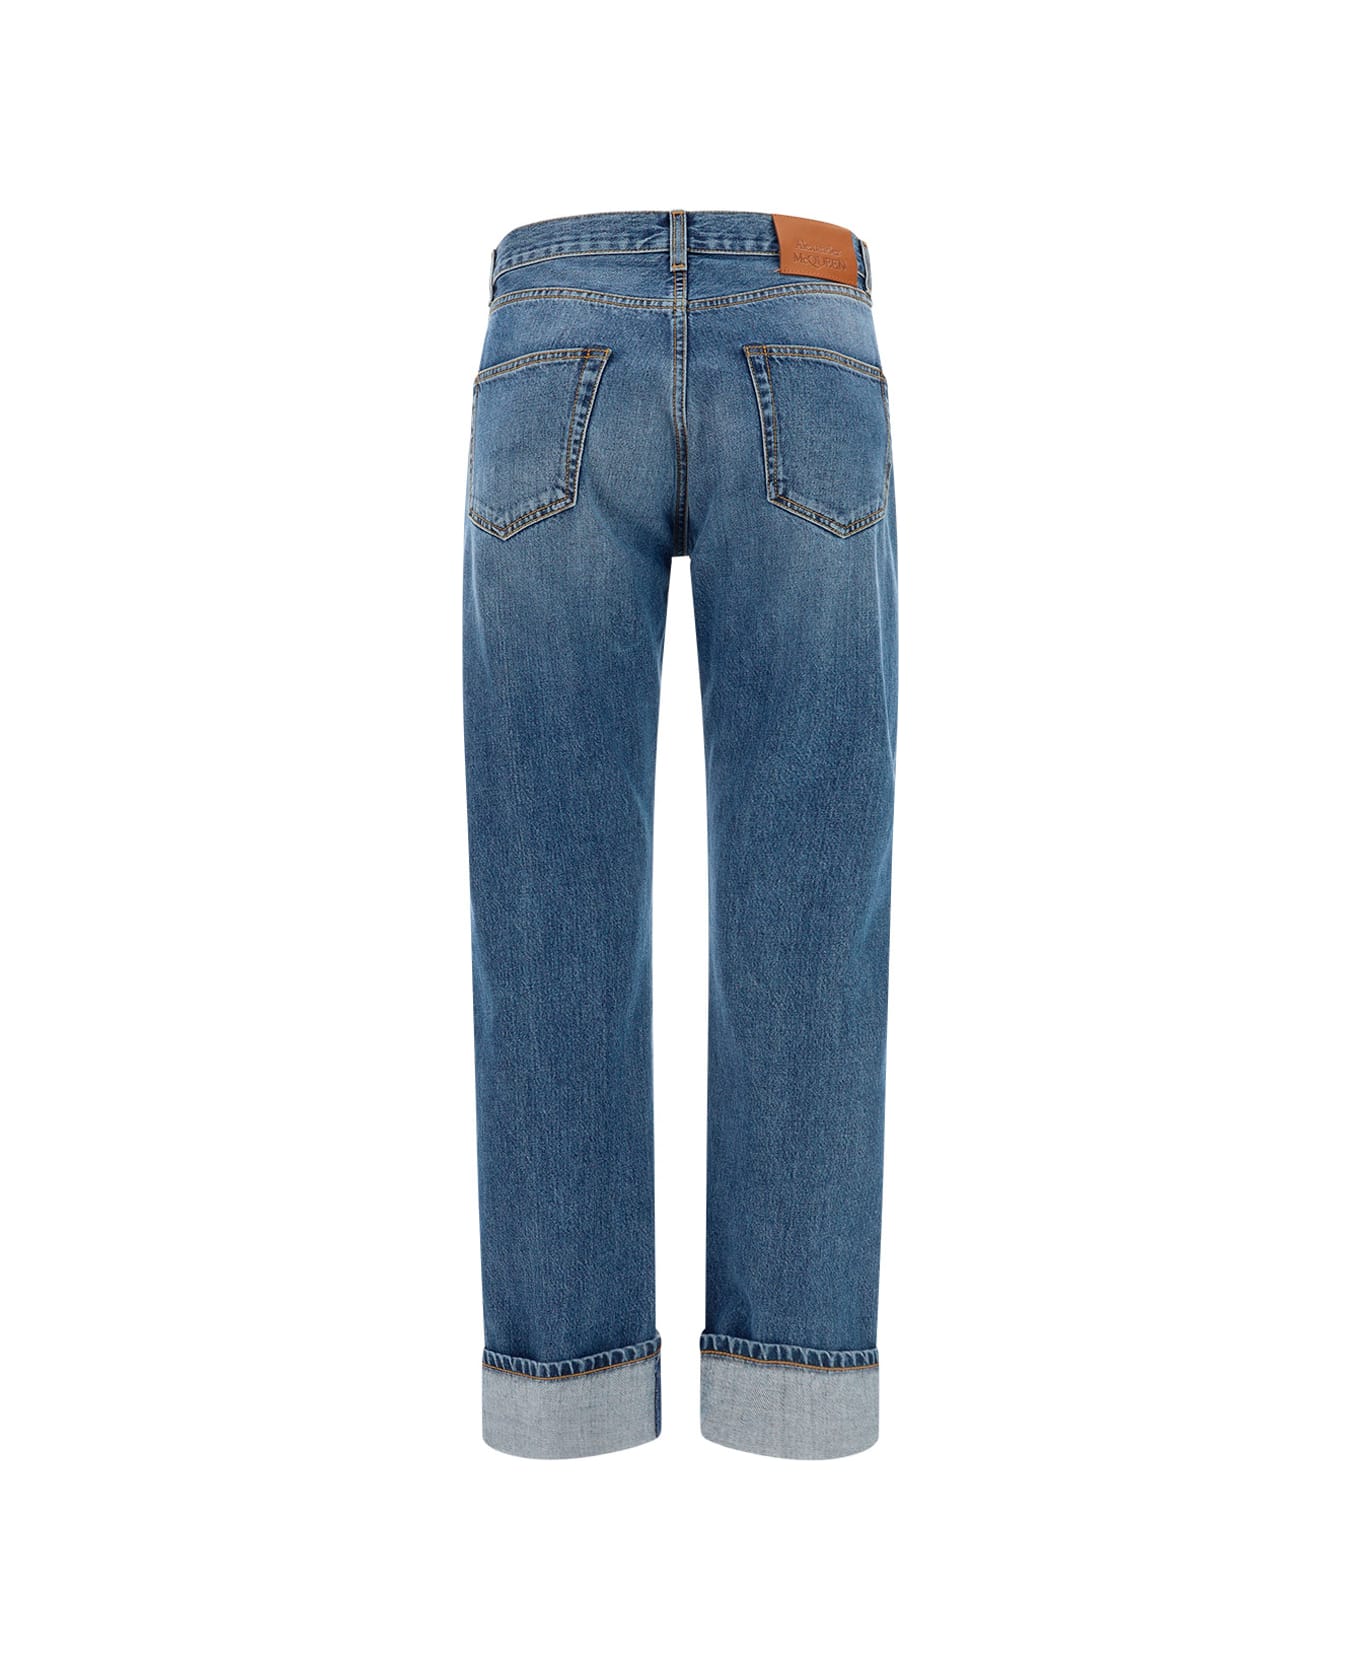 Alexander McQueen Five Pocket Jeans - Blue Washed